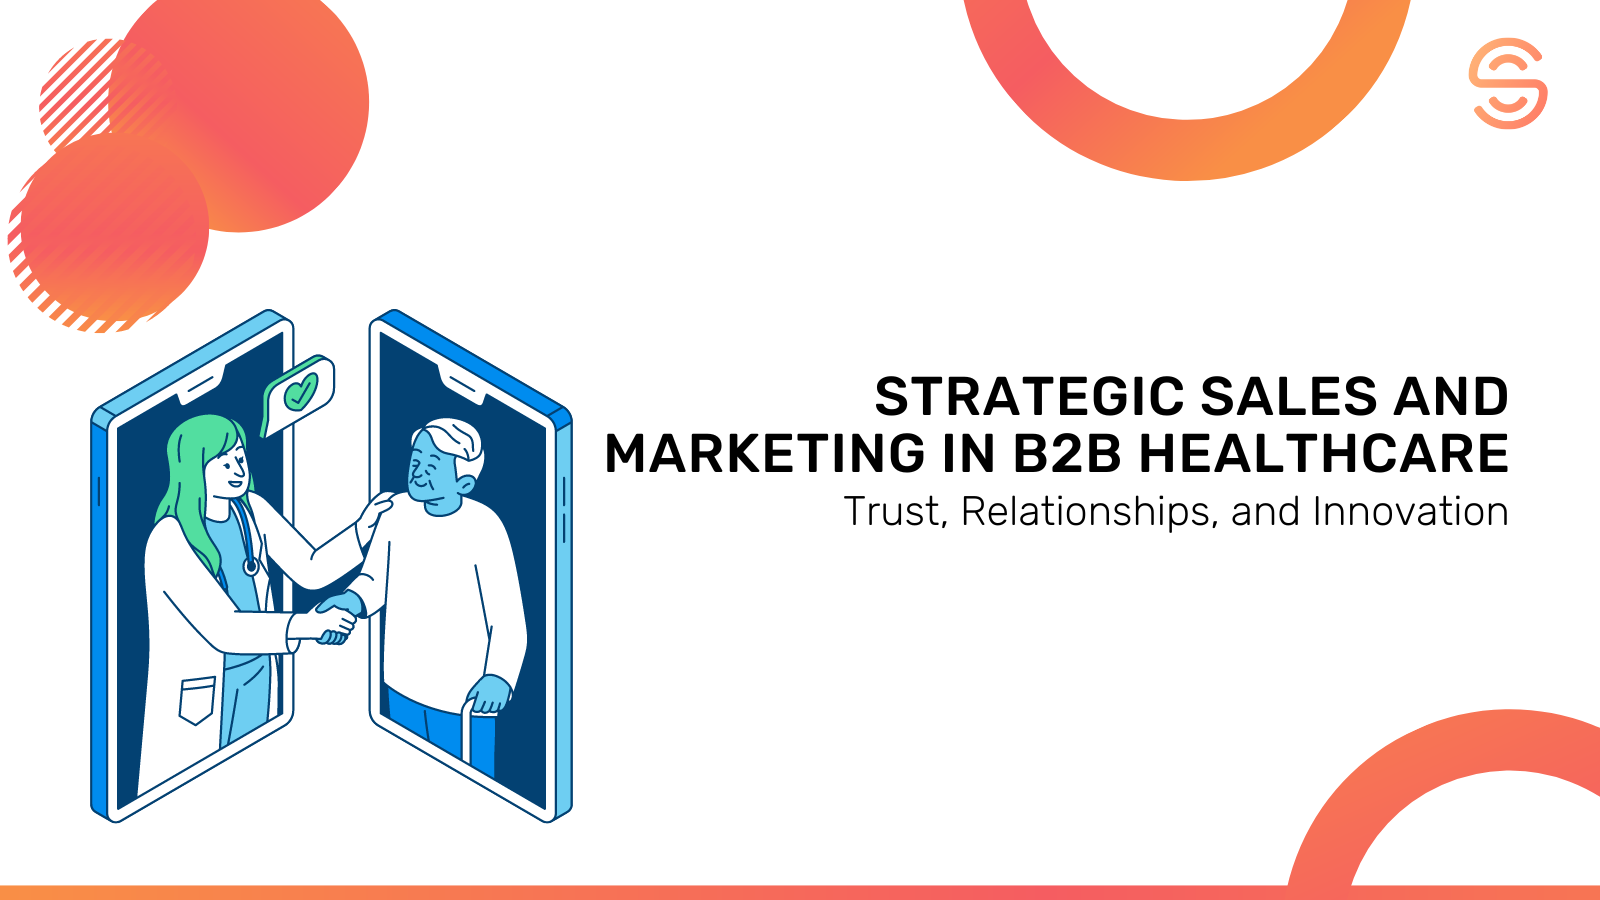 B2B healthcare marketing